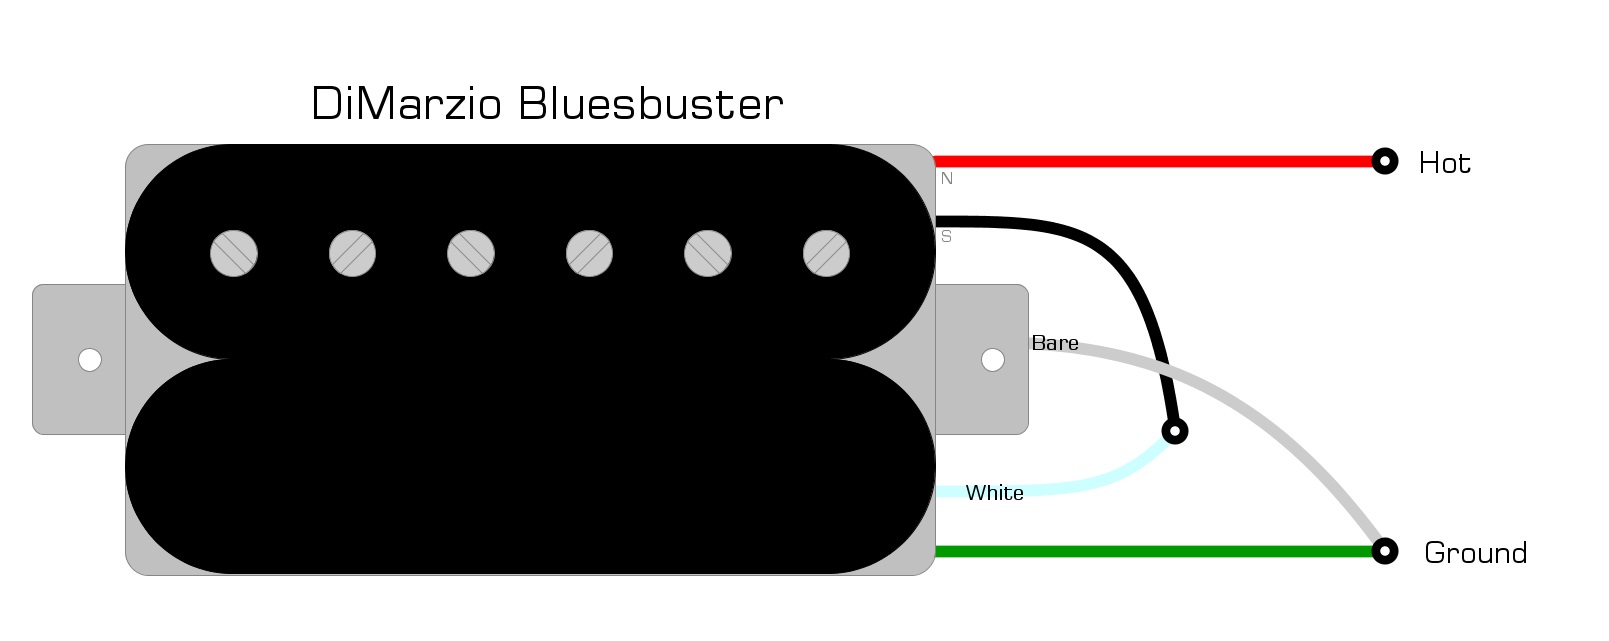 DiMarzio Bluesbucker Wiring Diagram | Humbucker Soup